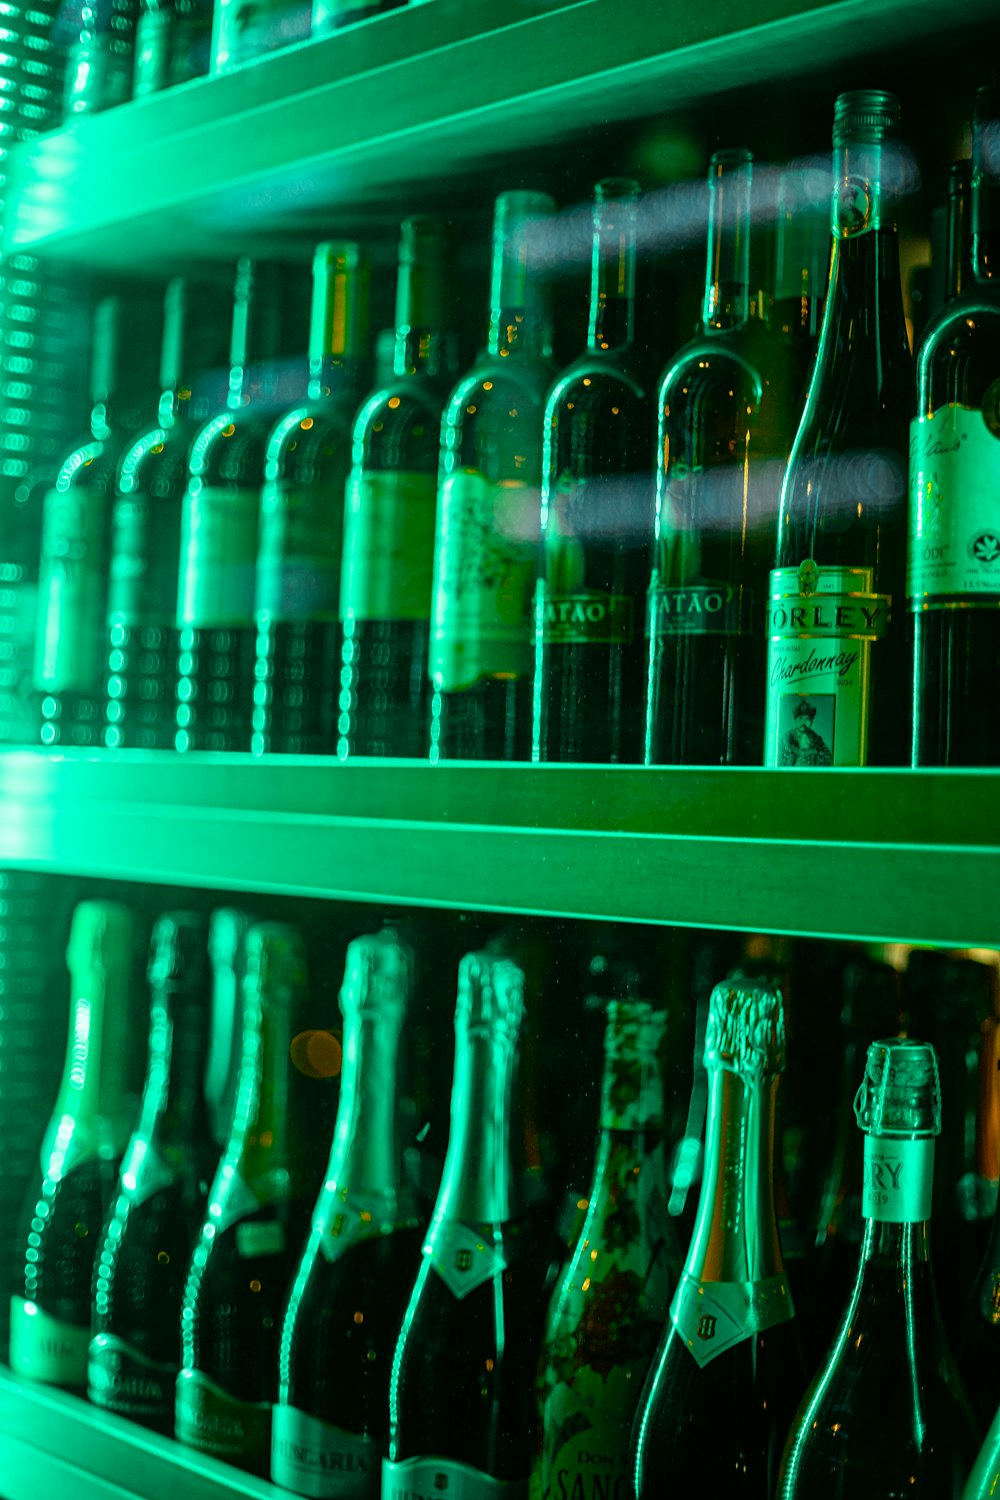 different wine bottles on display